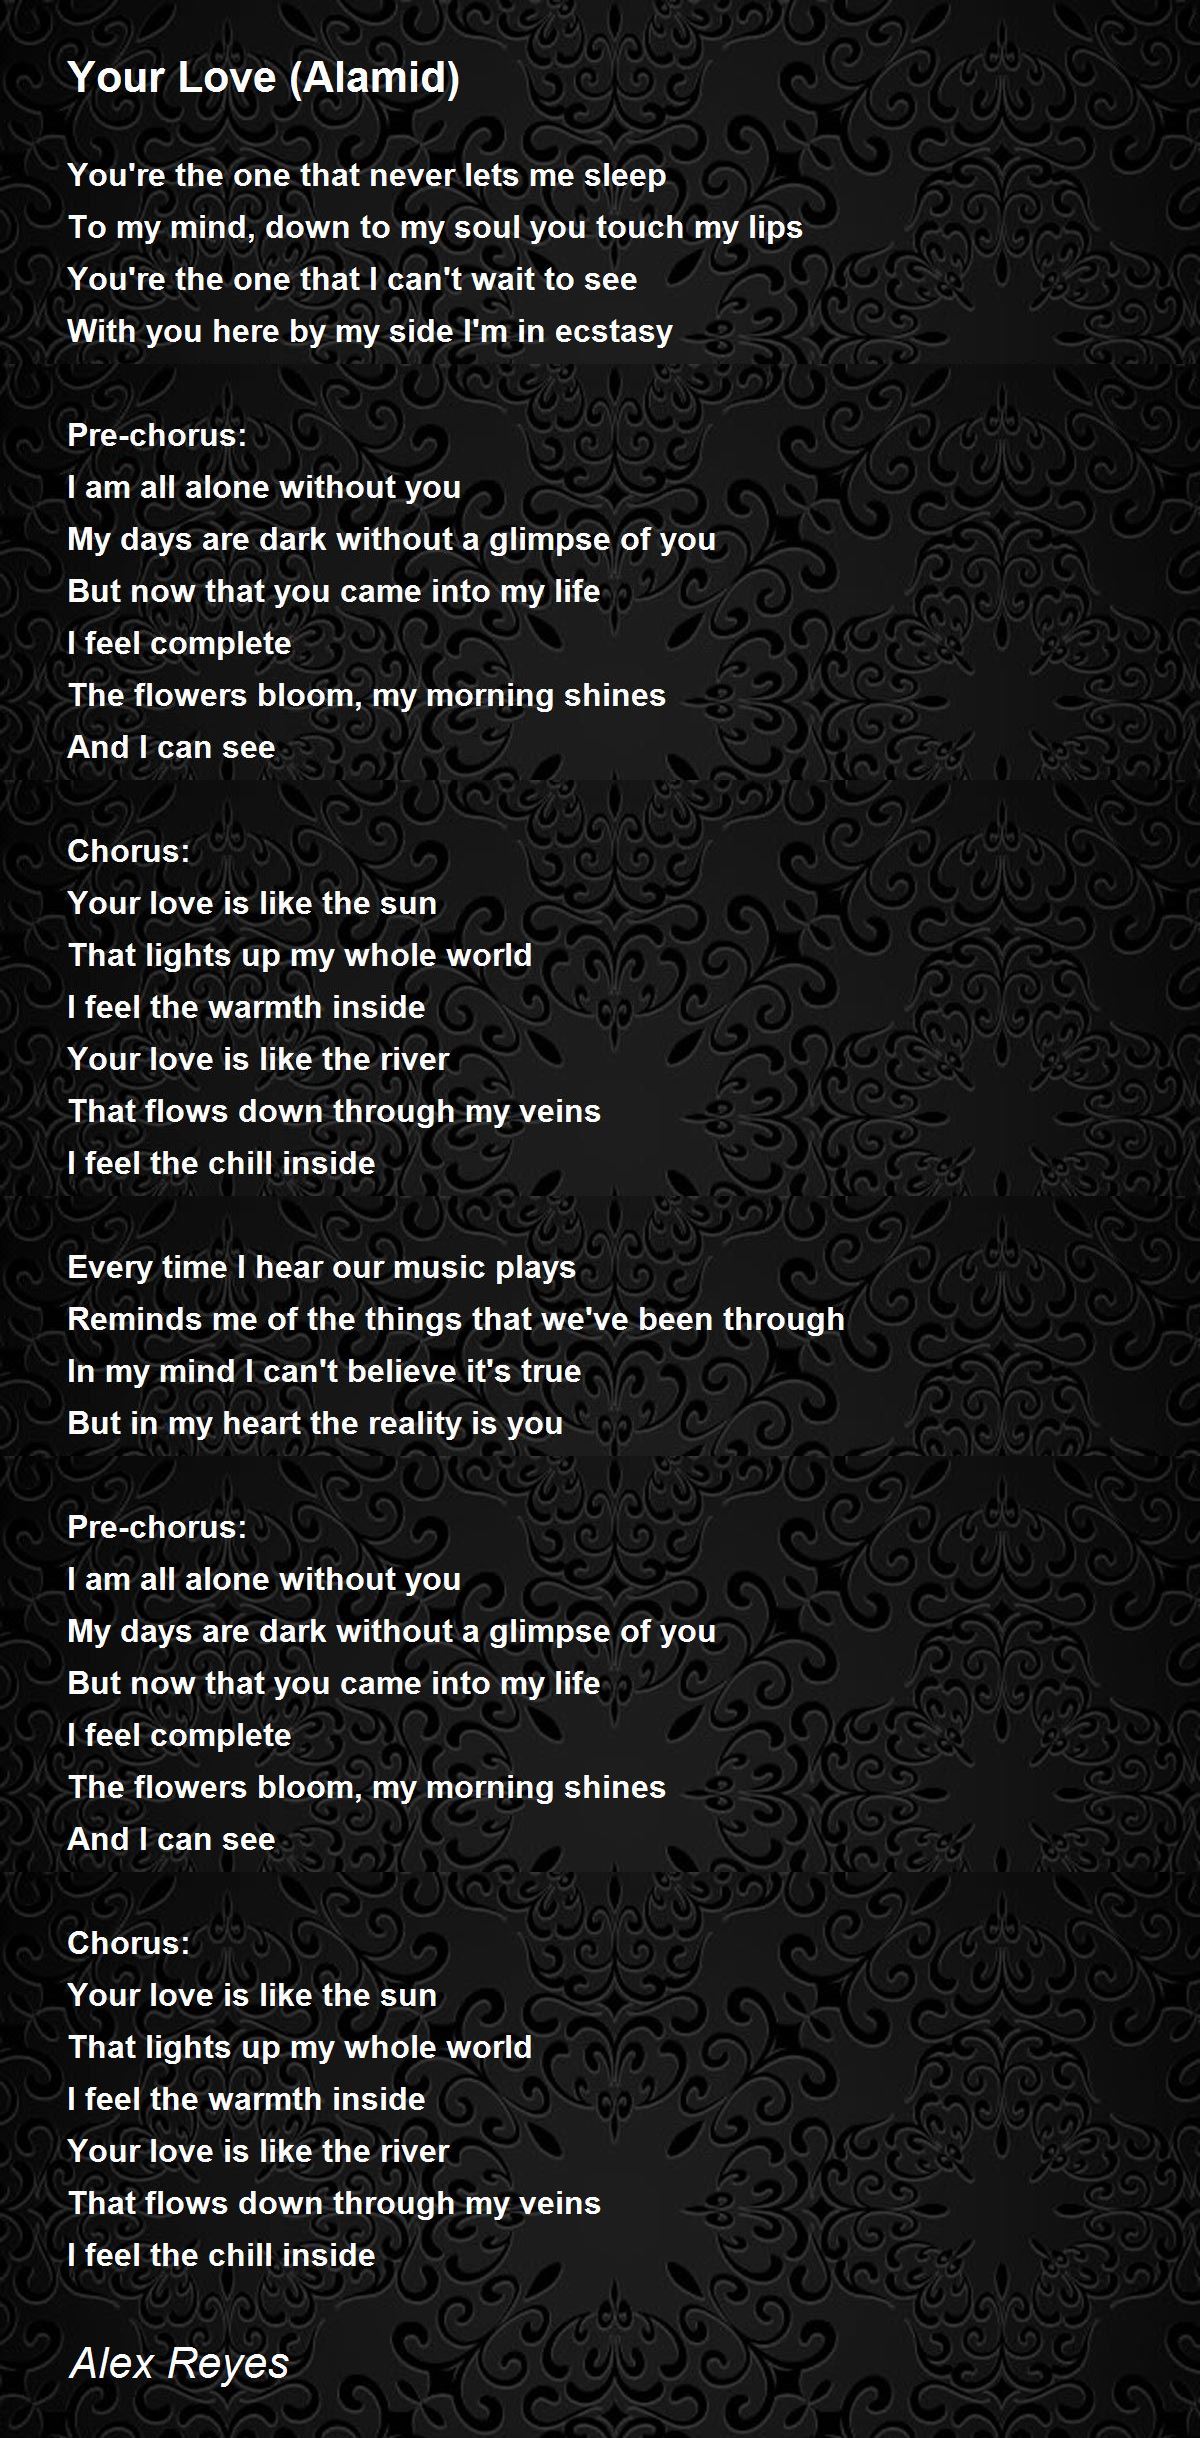 Alamid – Your Love Lyrics